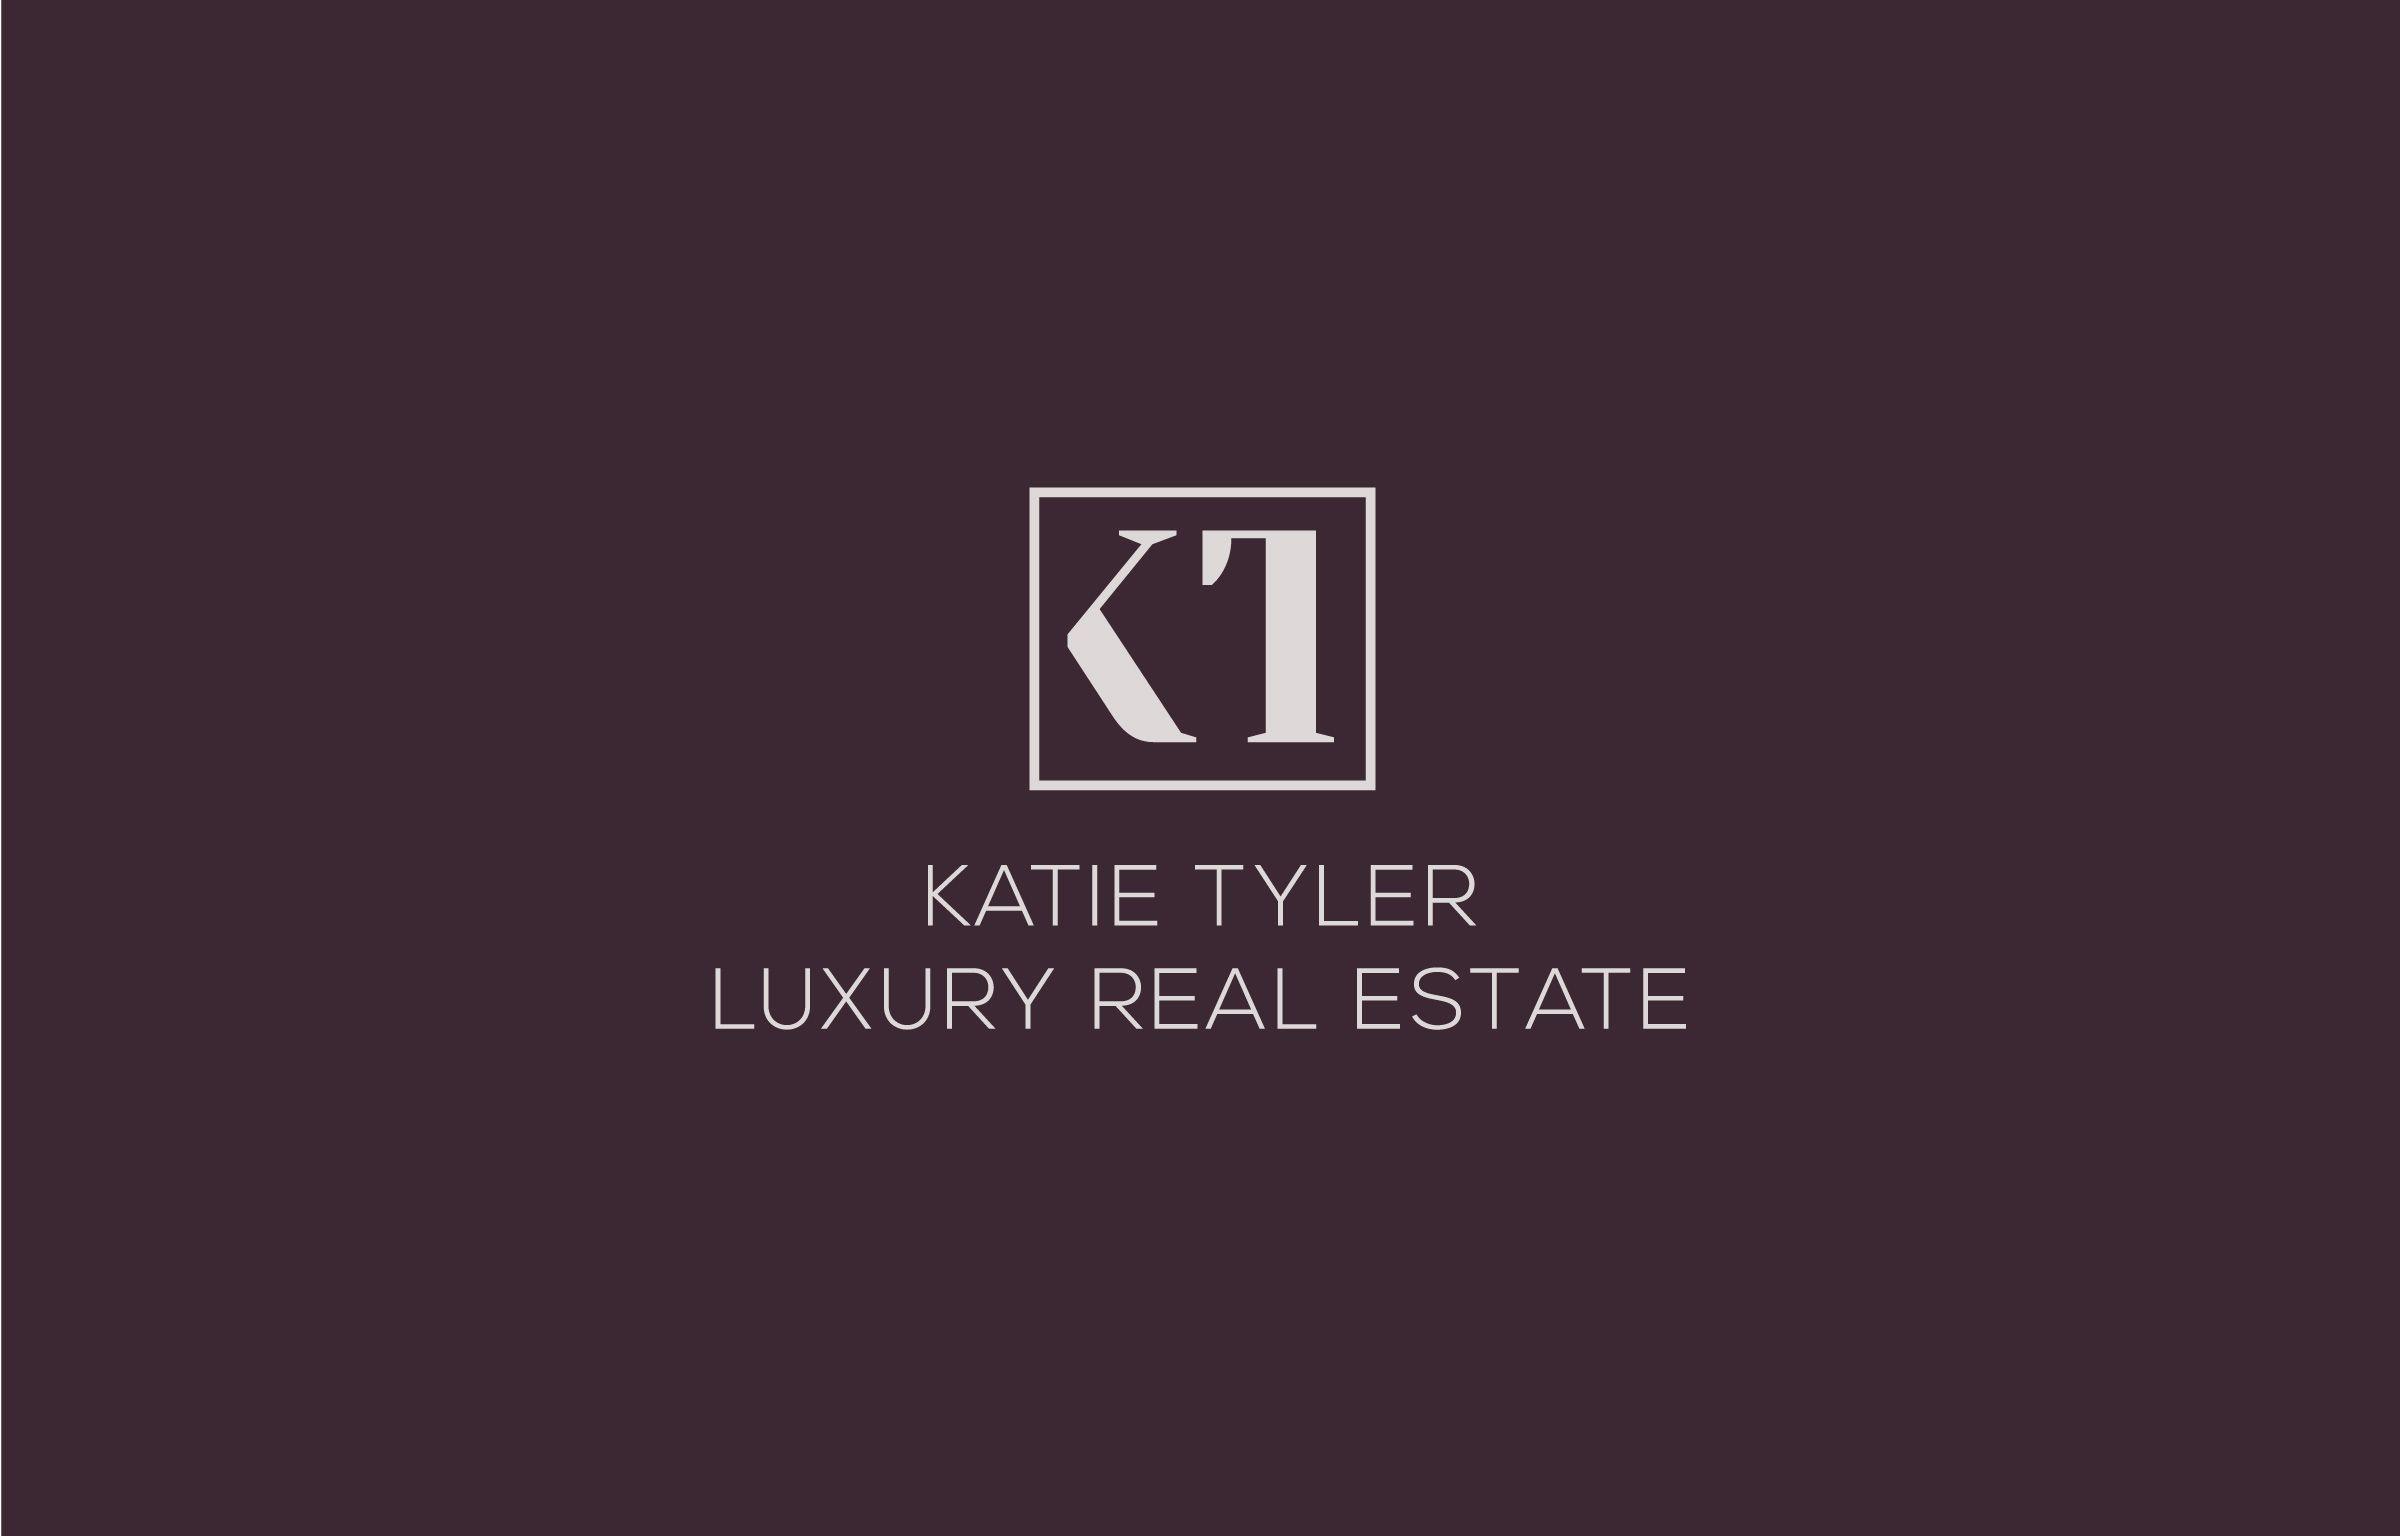 Unique Real Estate Logo - Luxury real estate Logos